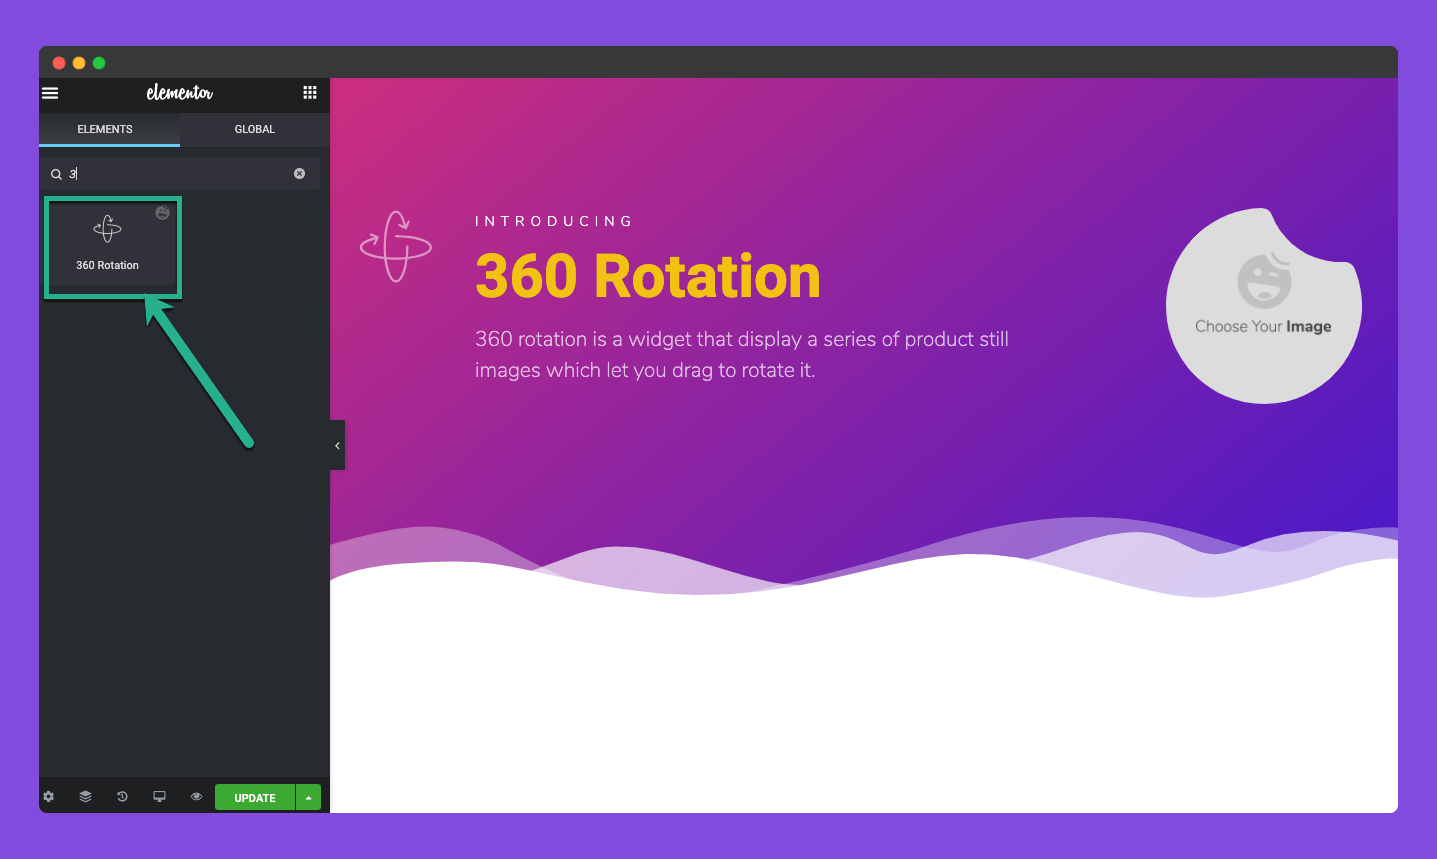 360 rotation